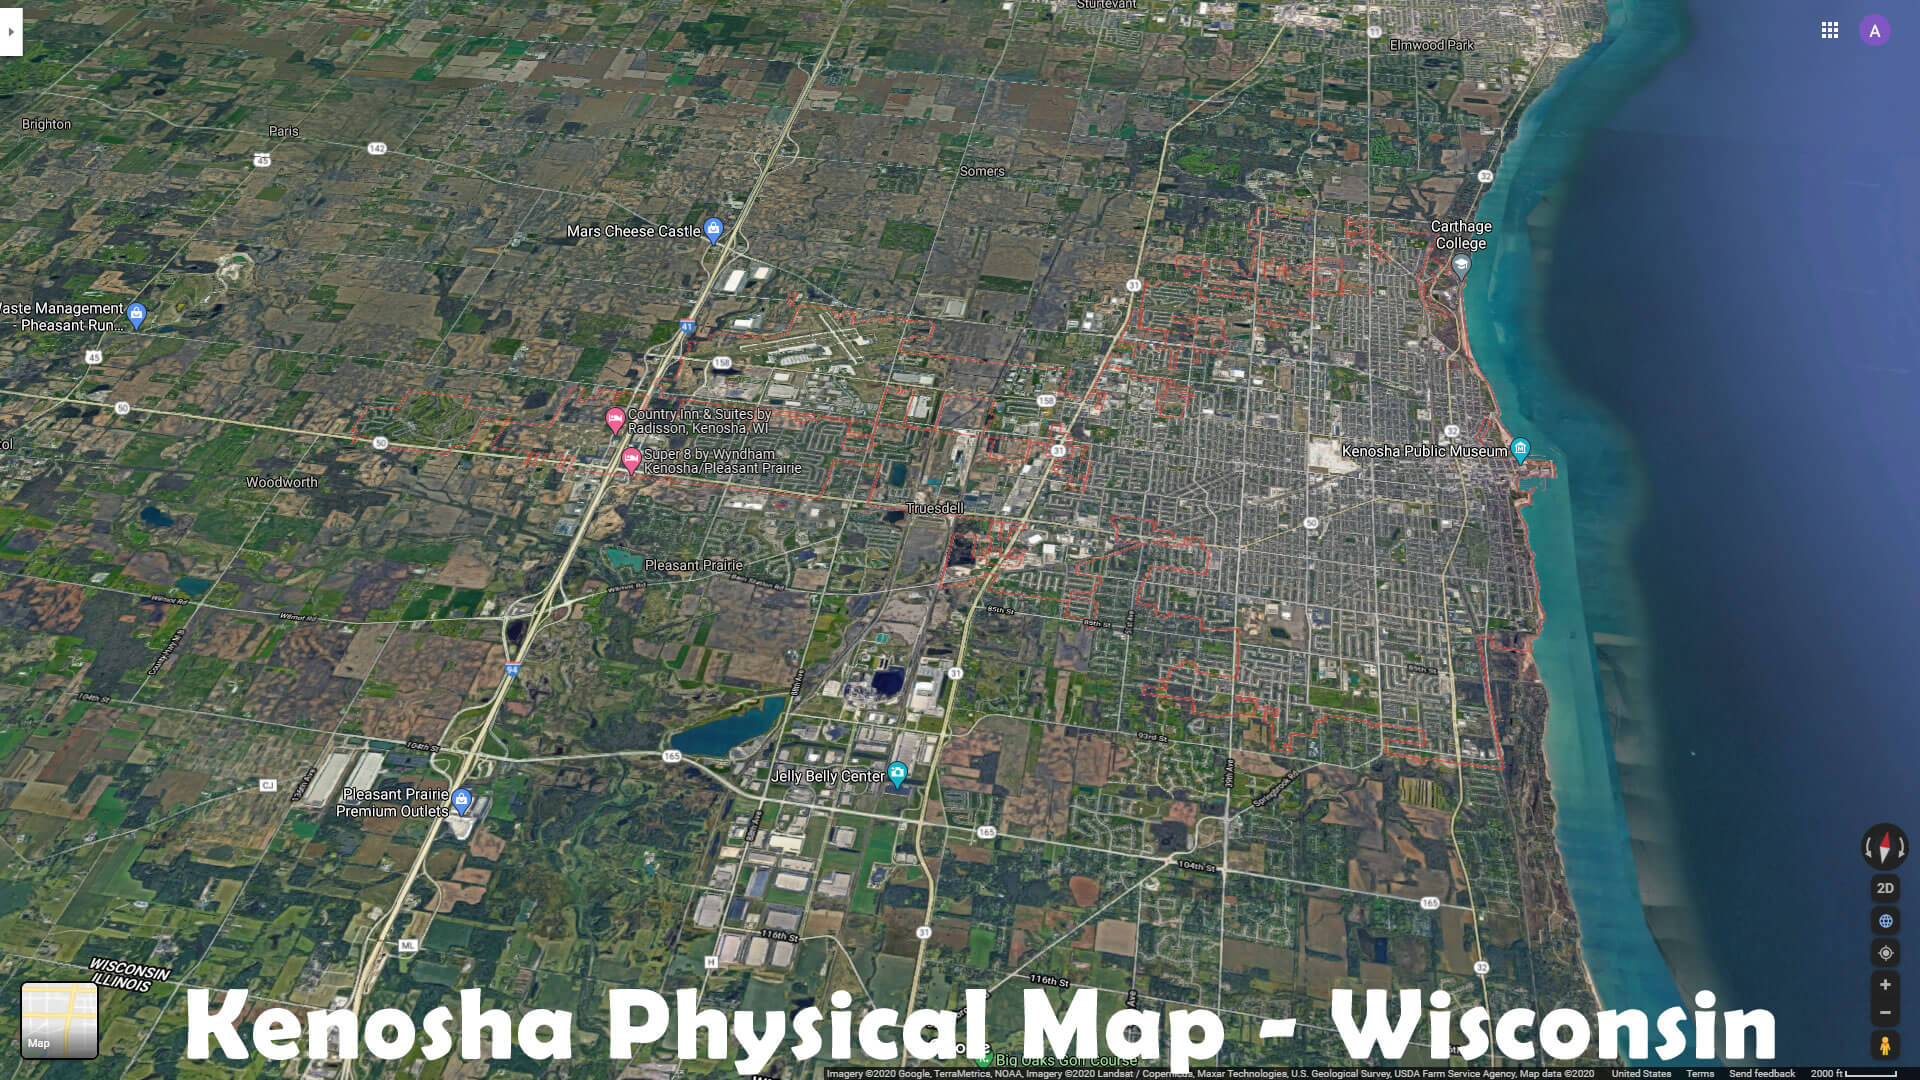 Kenosha Physical Map - Wisconsin